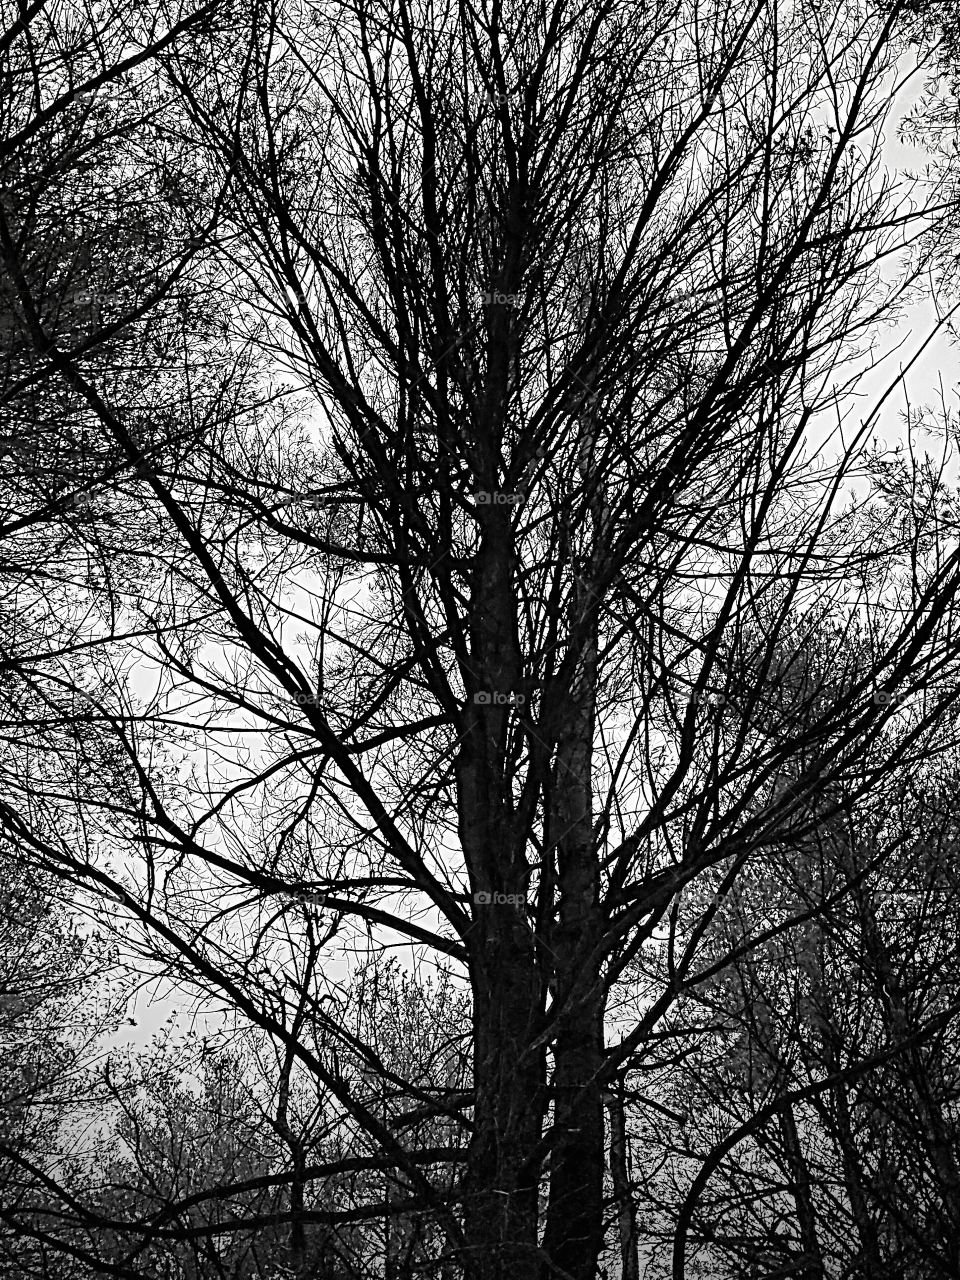 winter bare tree